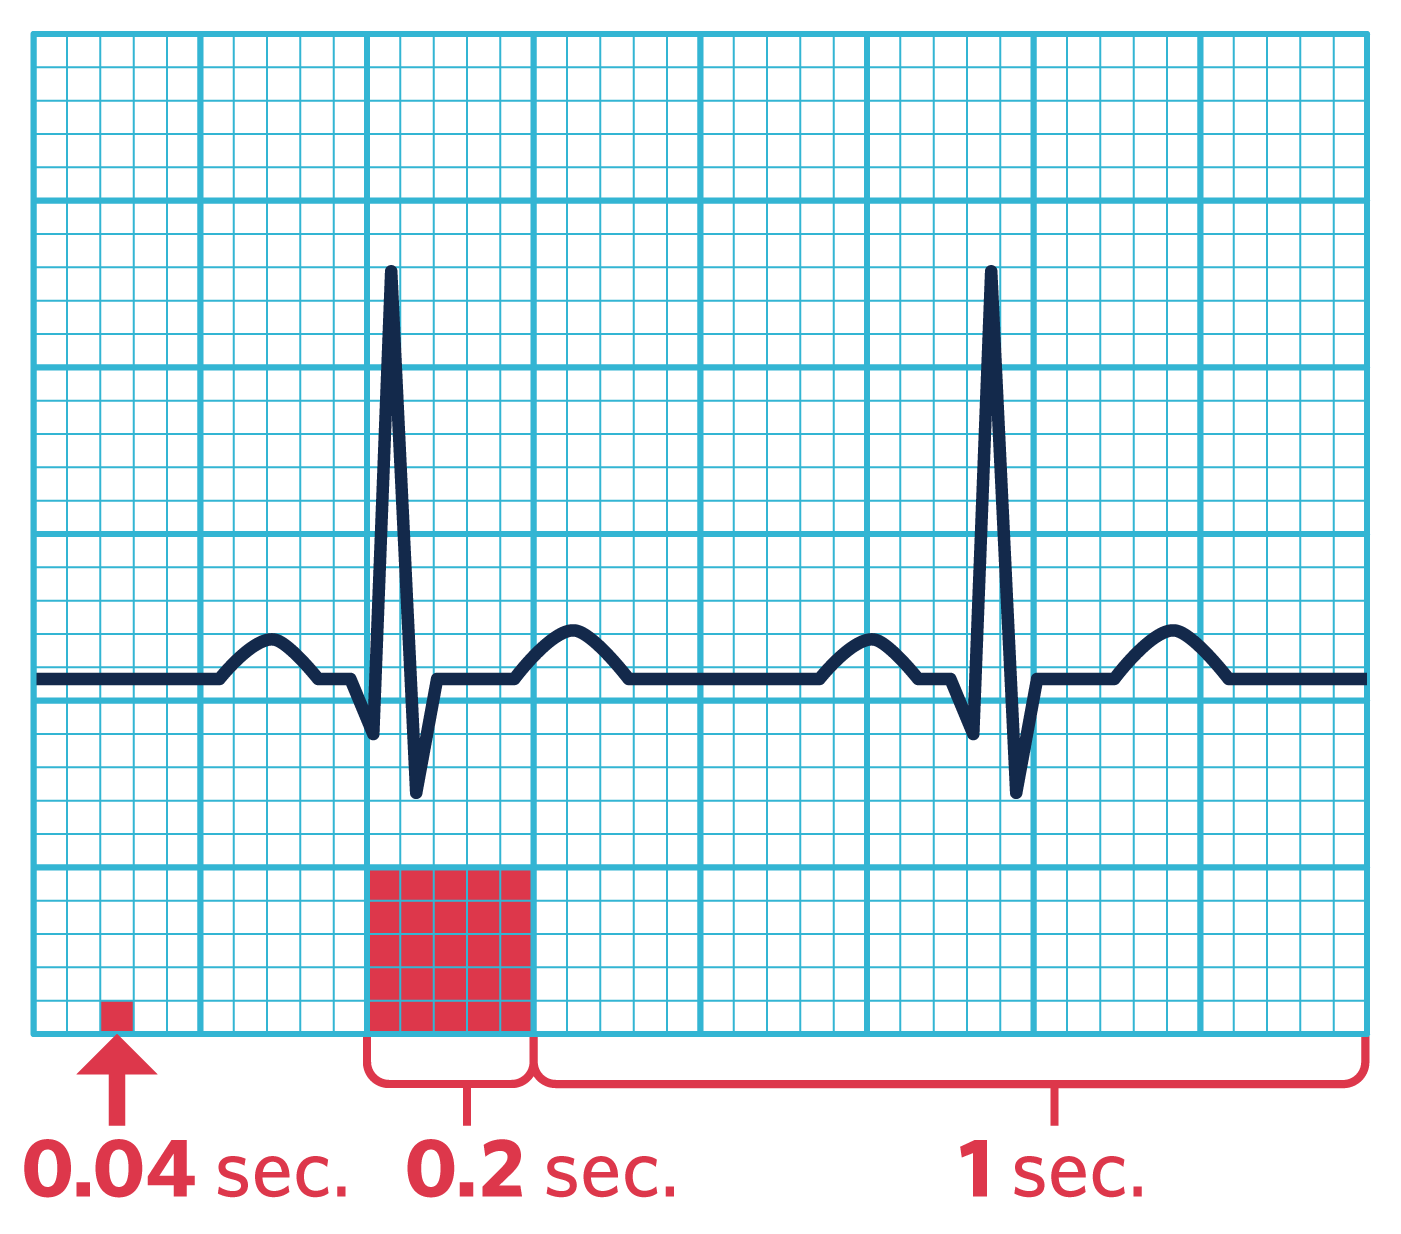 An ECG on a grid illustrating time intervals